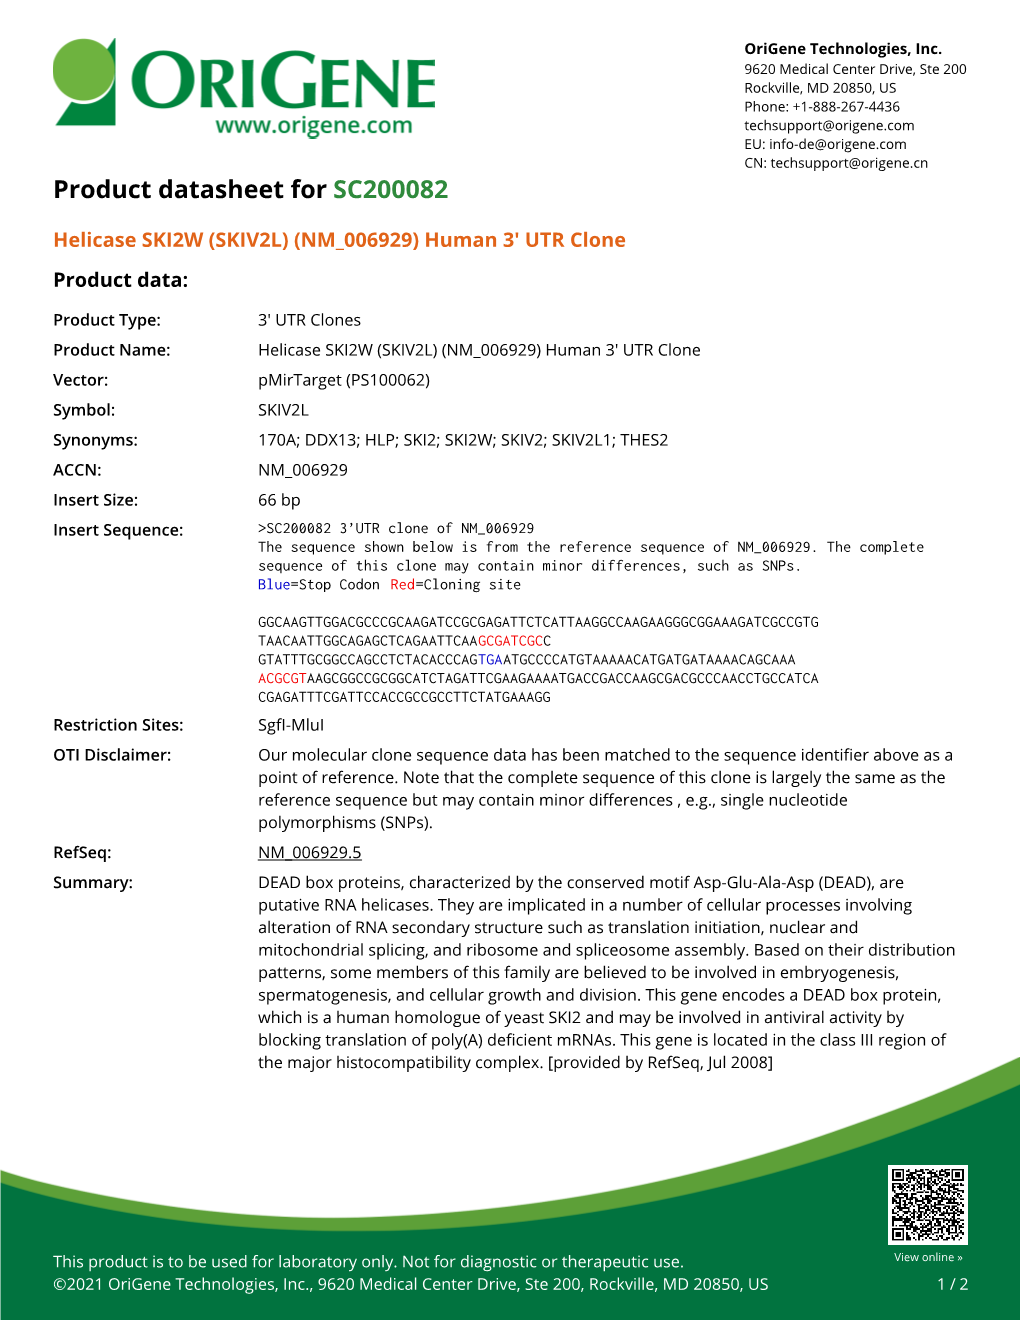 Helicase SKI2W (SKIV2L) (NM 006929) Human 3' UTR Clone Product Data